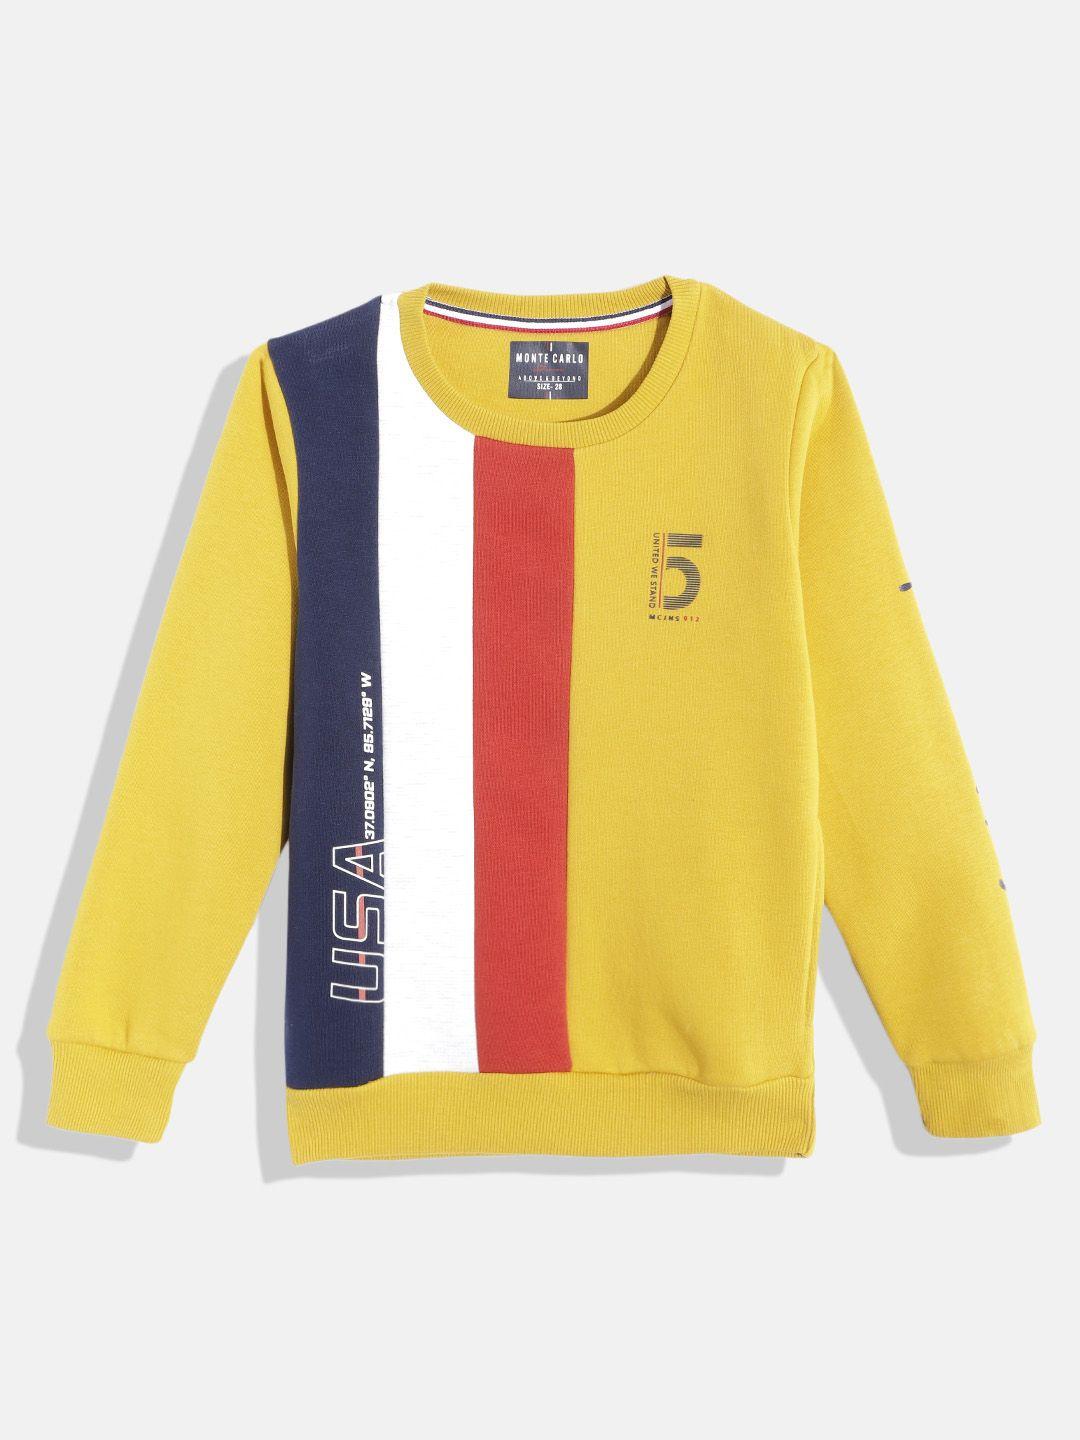 monte carlo boys yellow & red striped sweatshirt